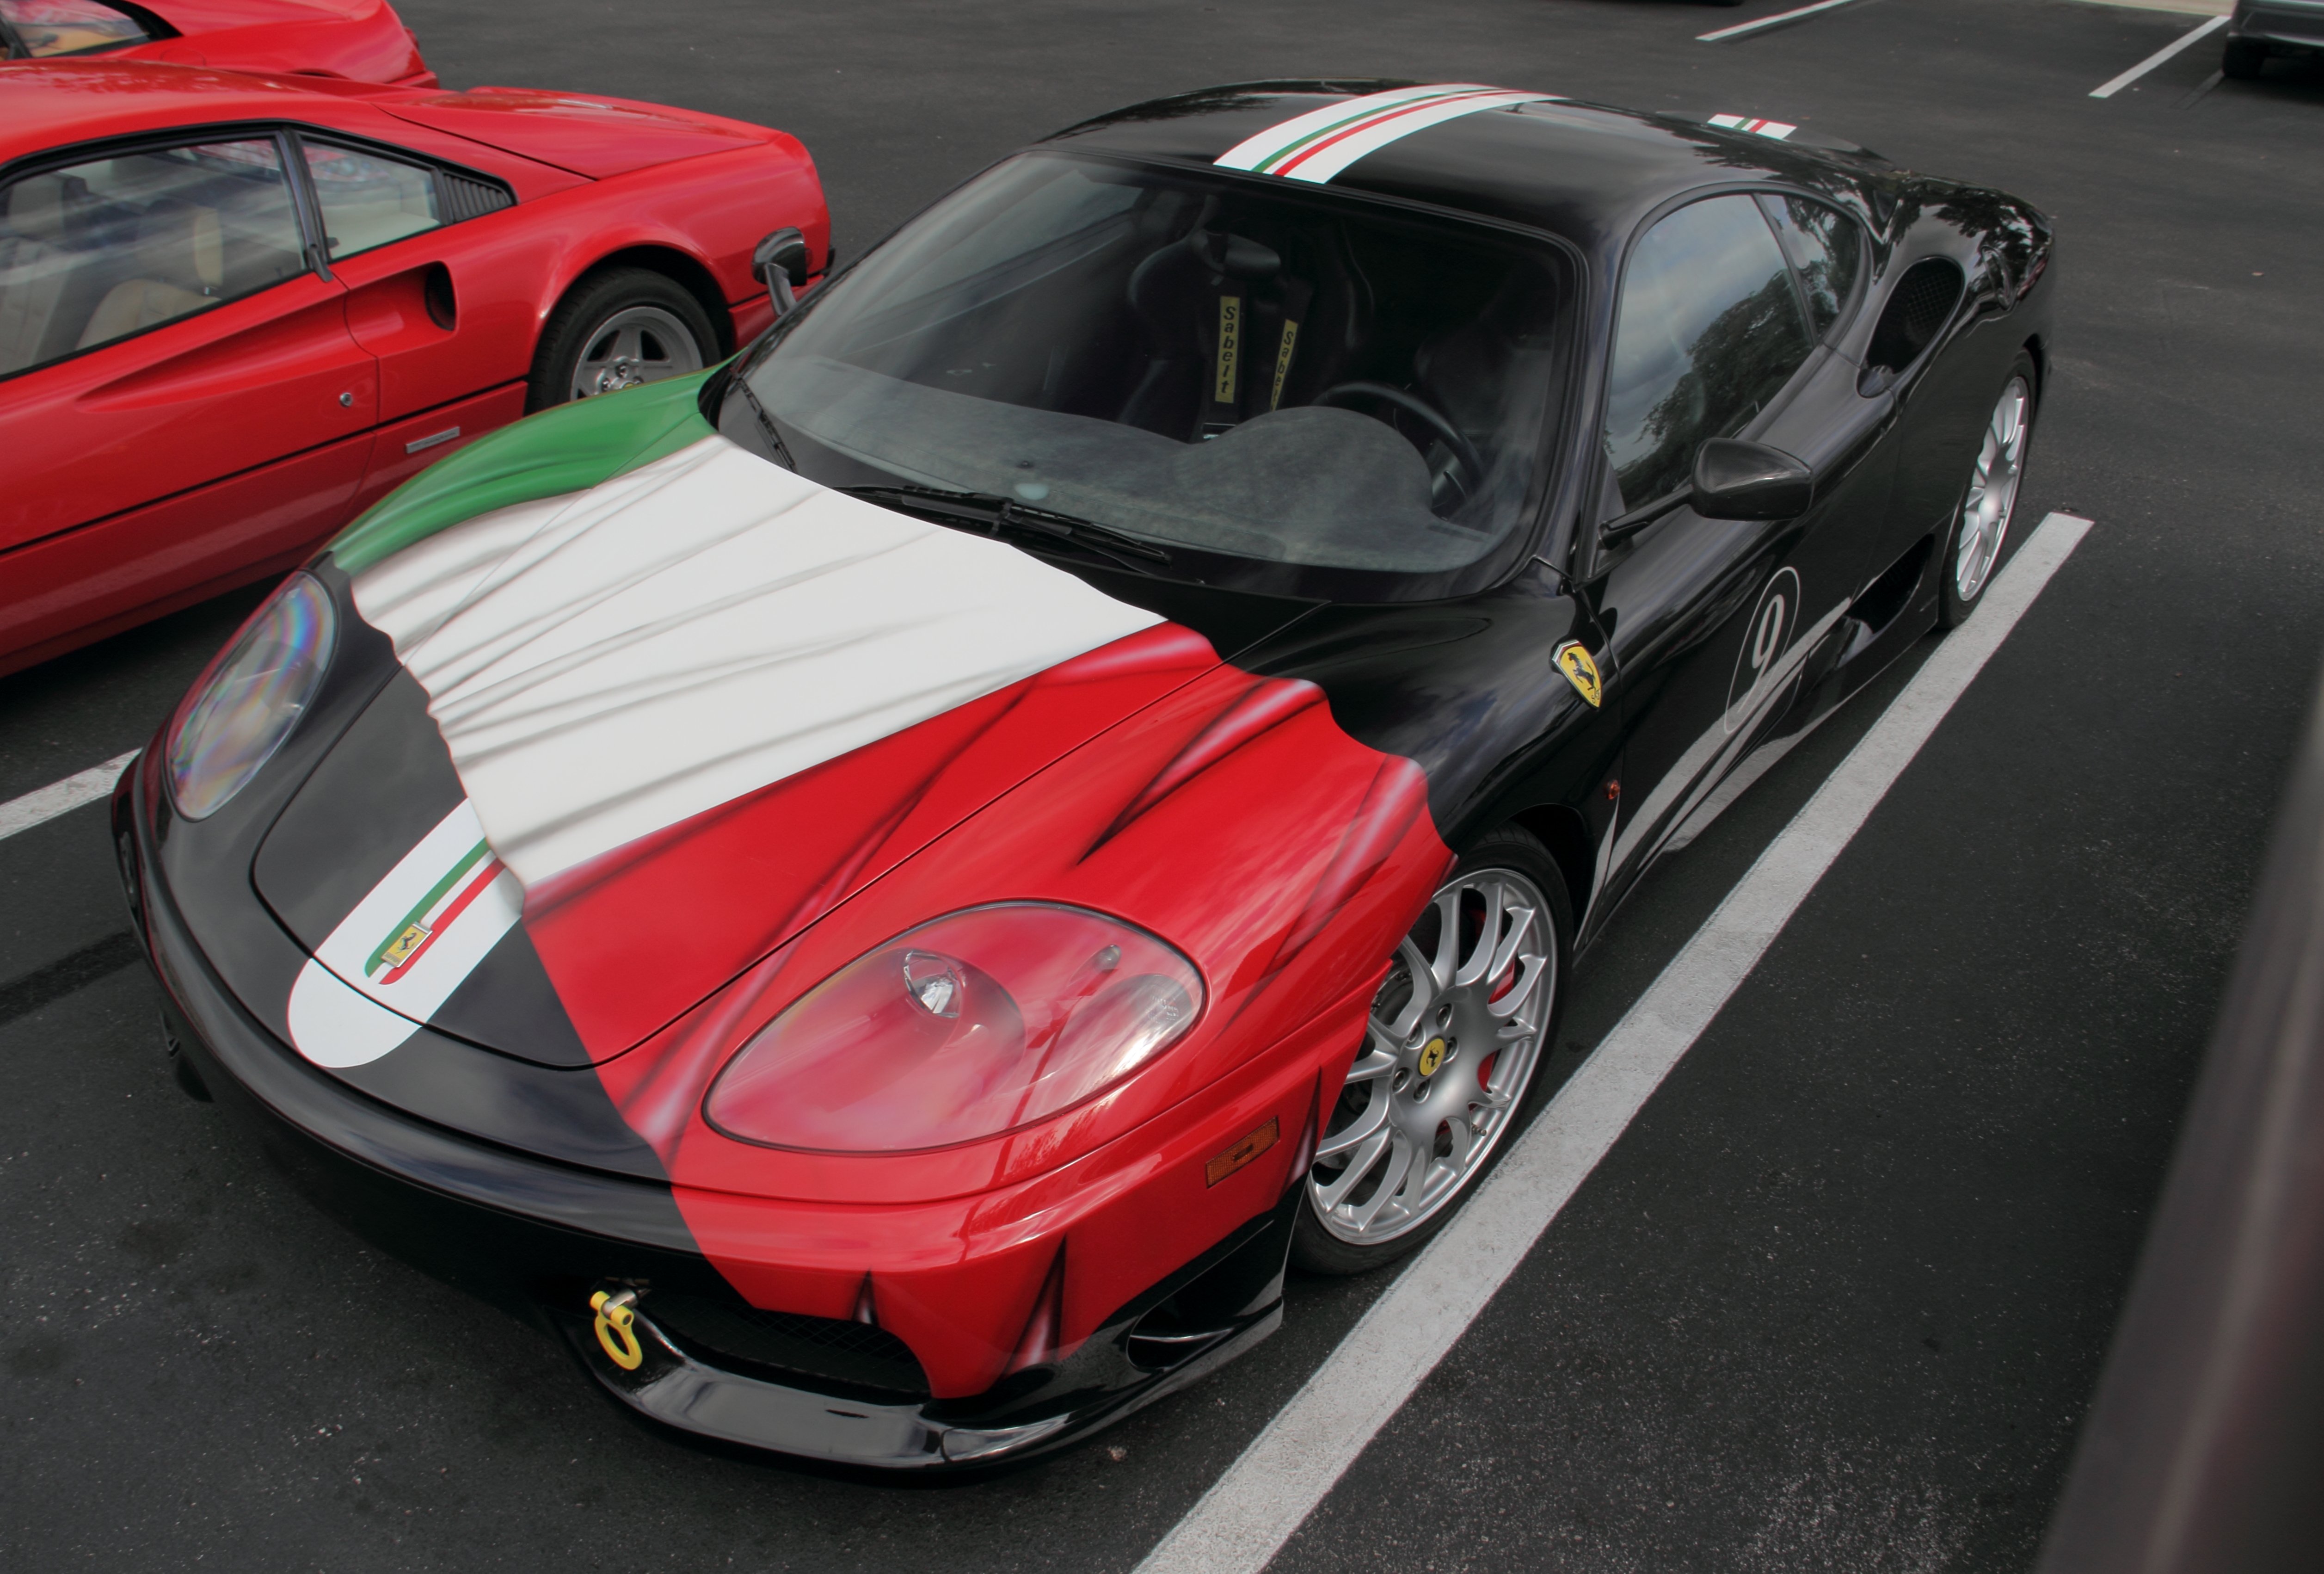 2003, 360, Challenge, Ferrari, Stradale, Noir, Black, Nero